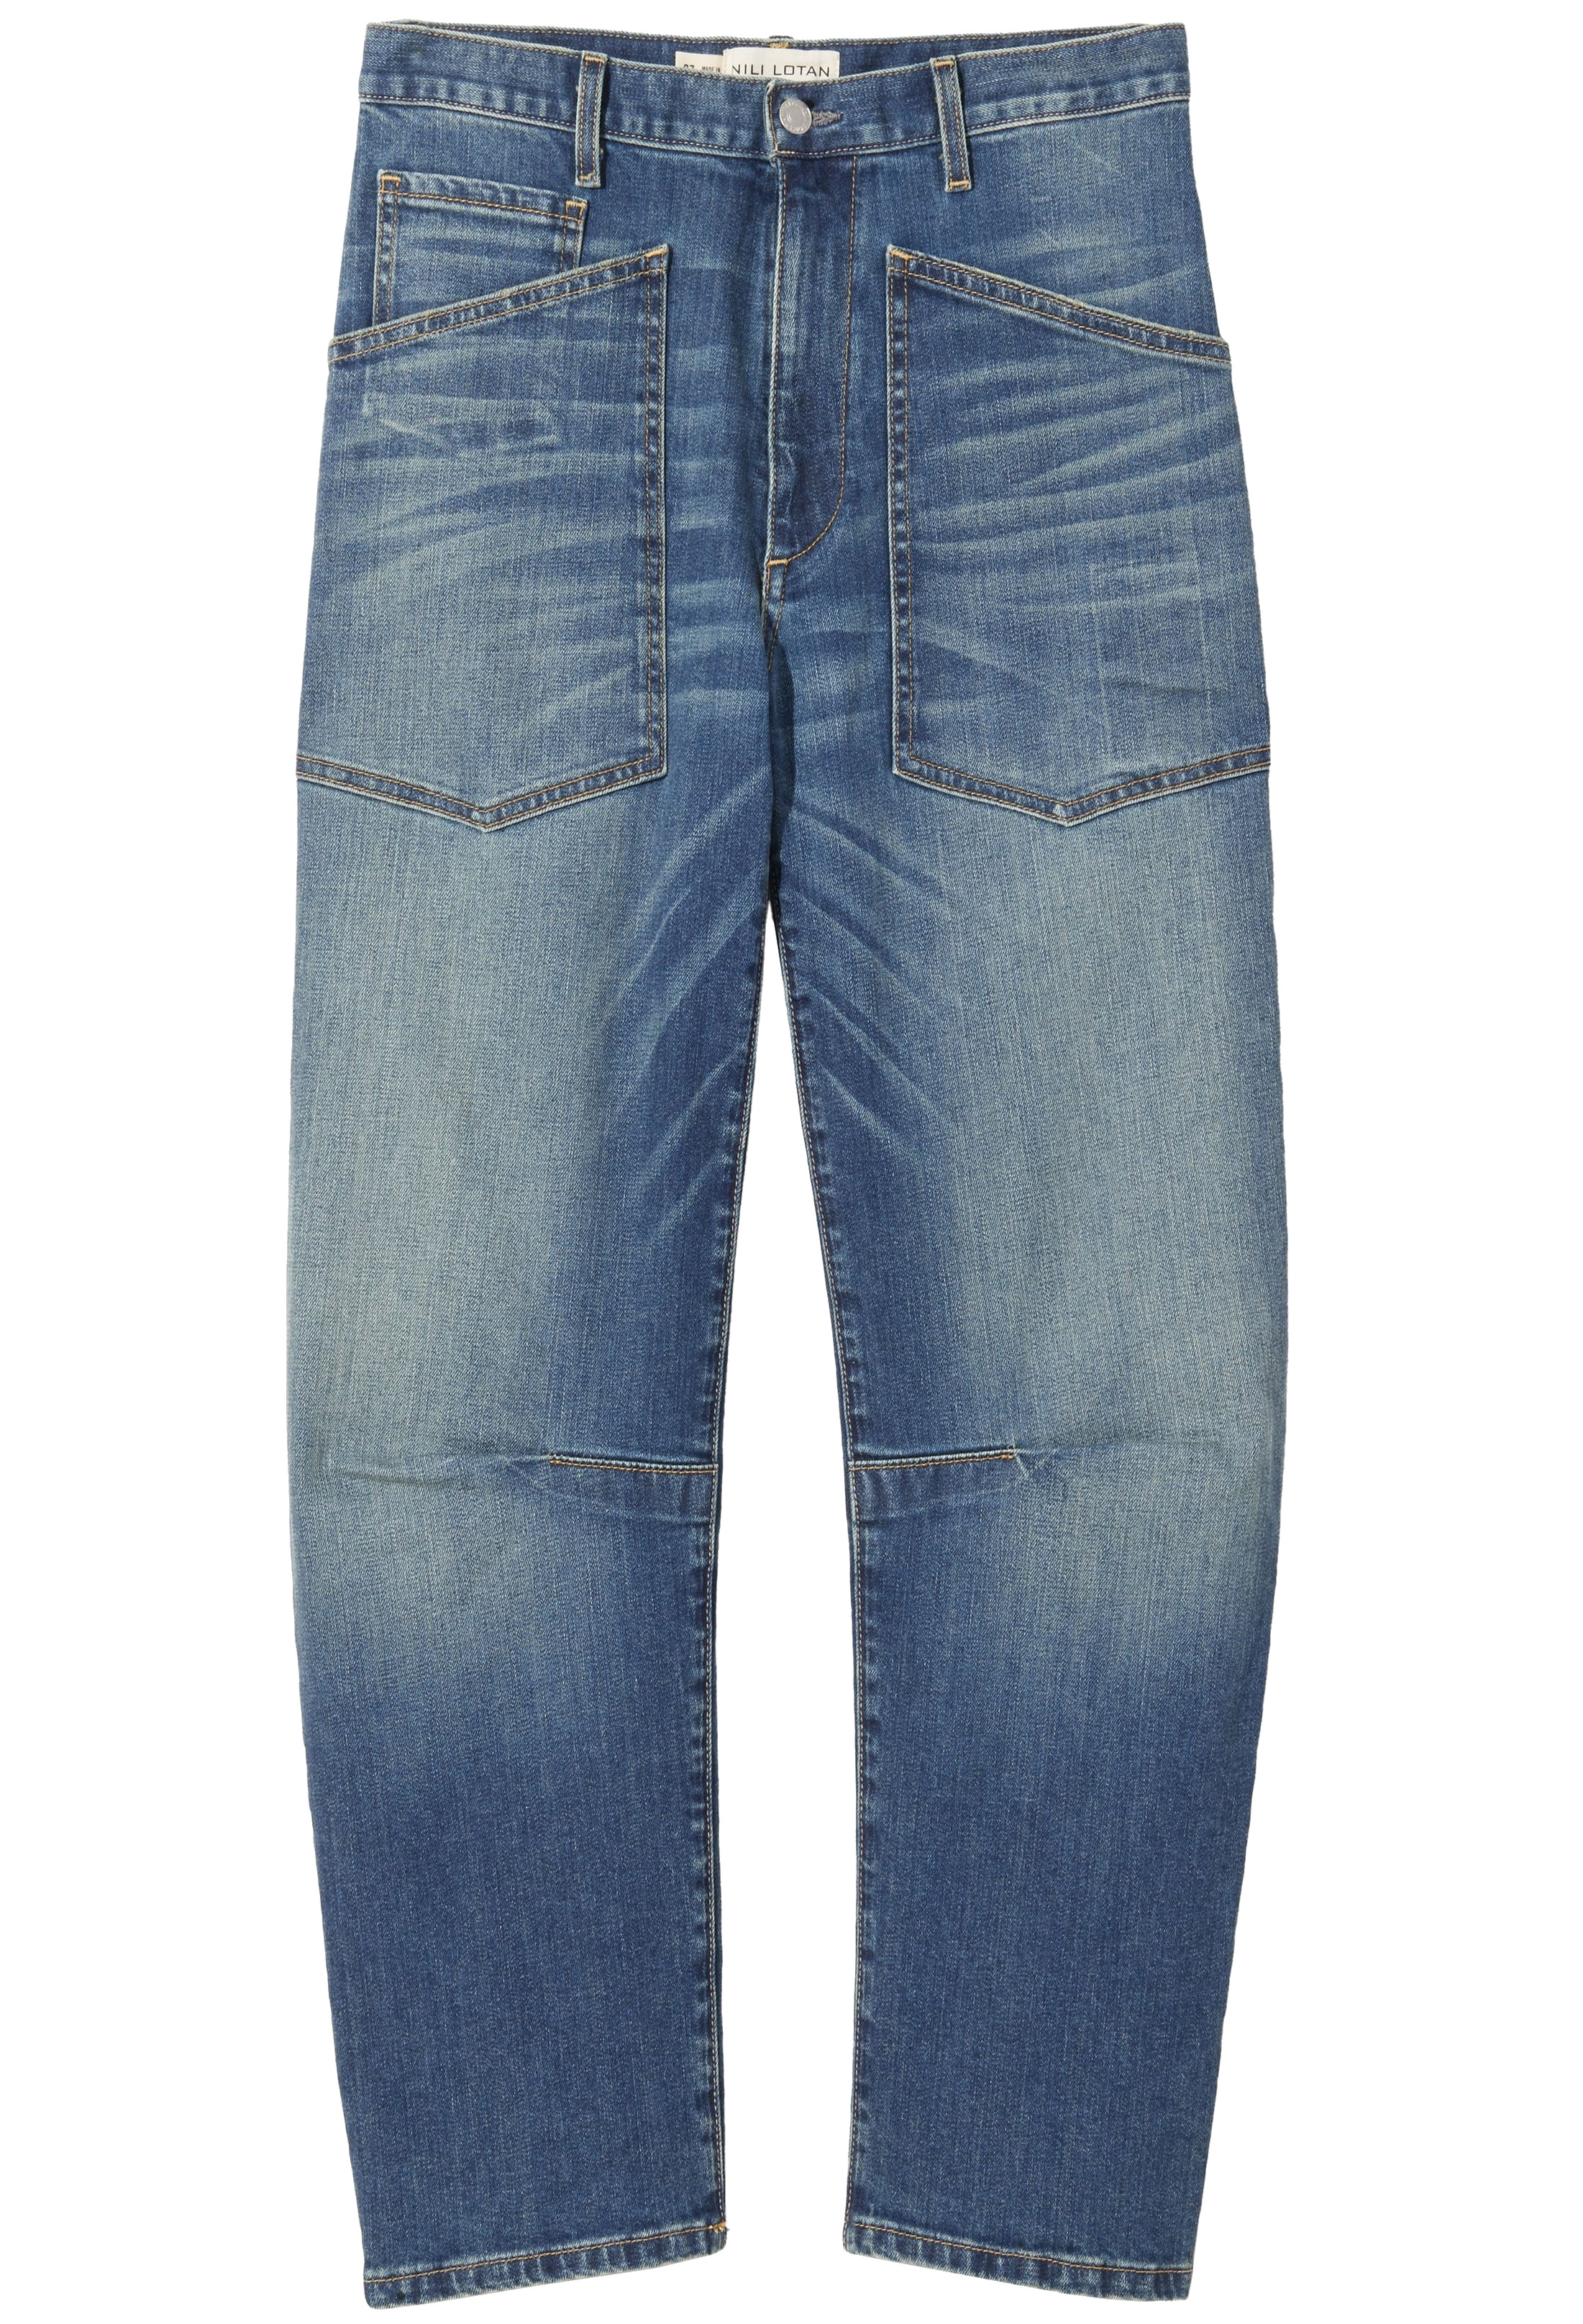 NILI LOTAN Shon Jeans in Classic Wash 25